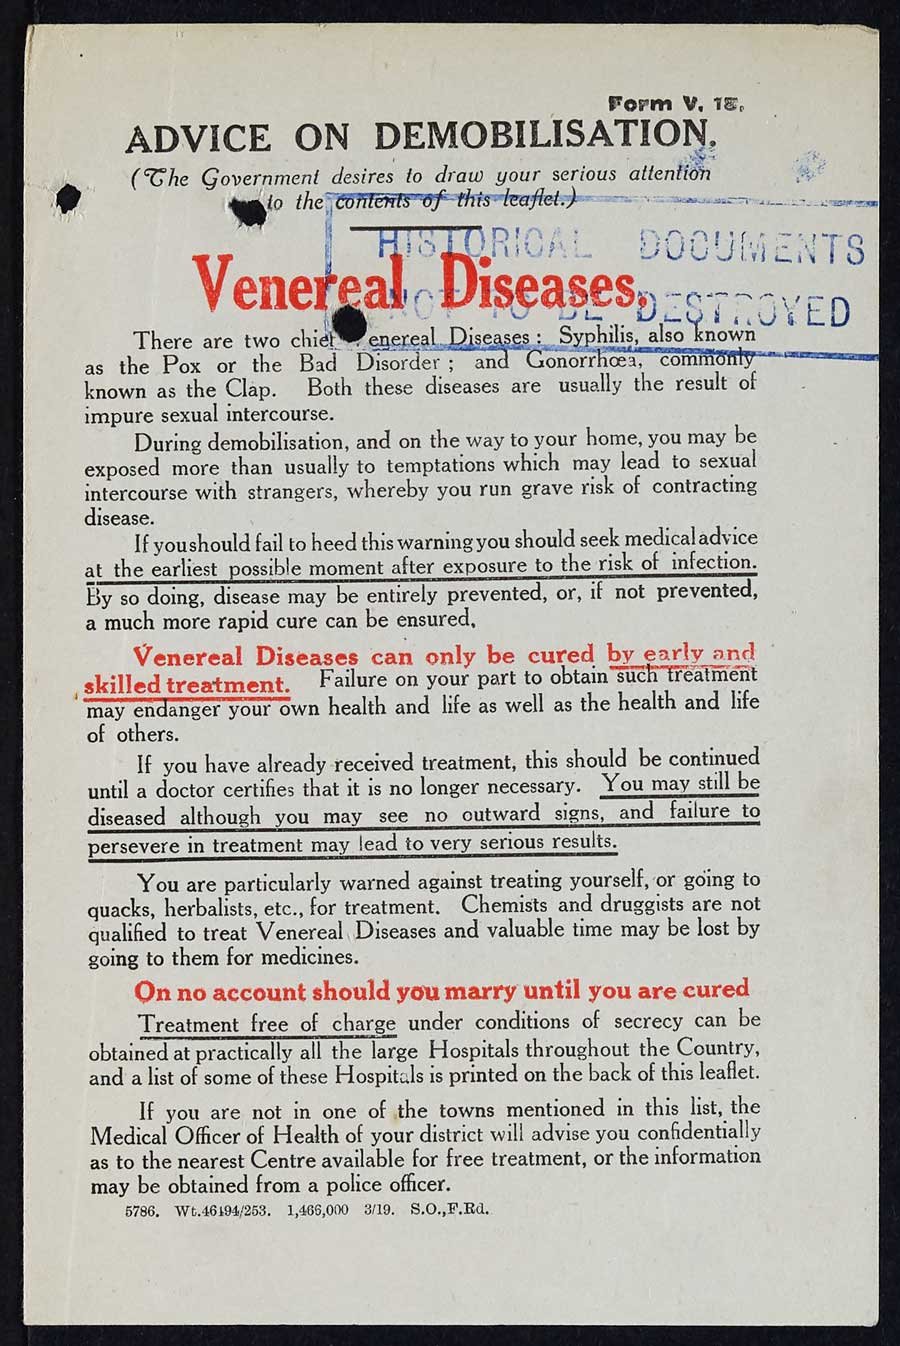 A densely written leaflet giving advice on venereal disease.